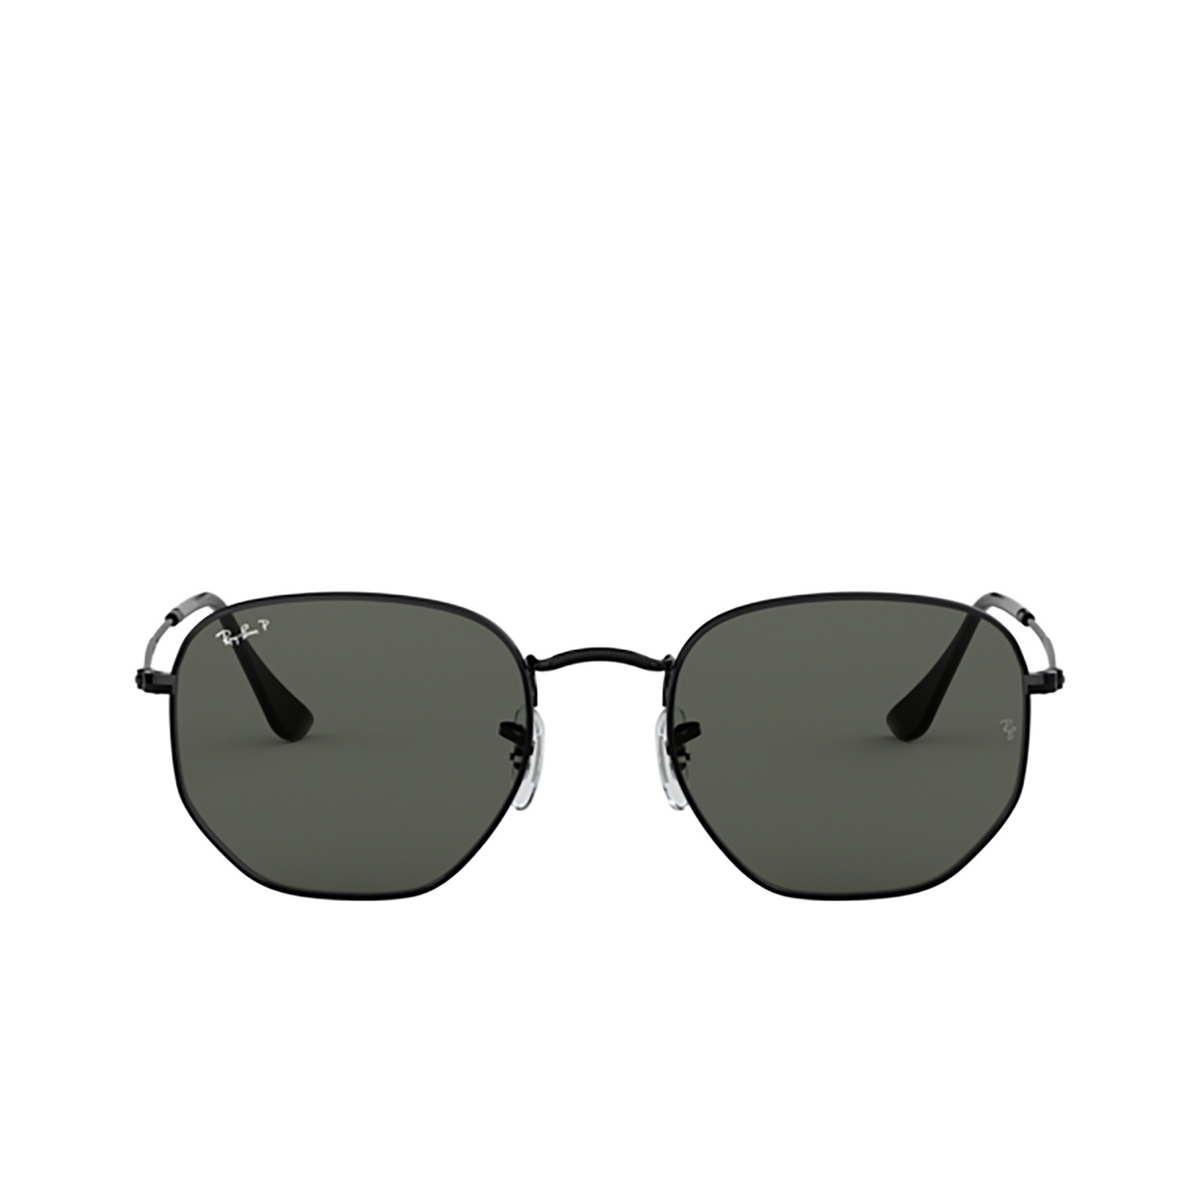 Ray-Ban HEXAGONAL Sunglasses 002/58 BLACK - front view